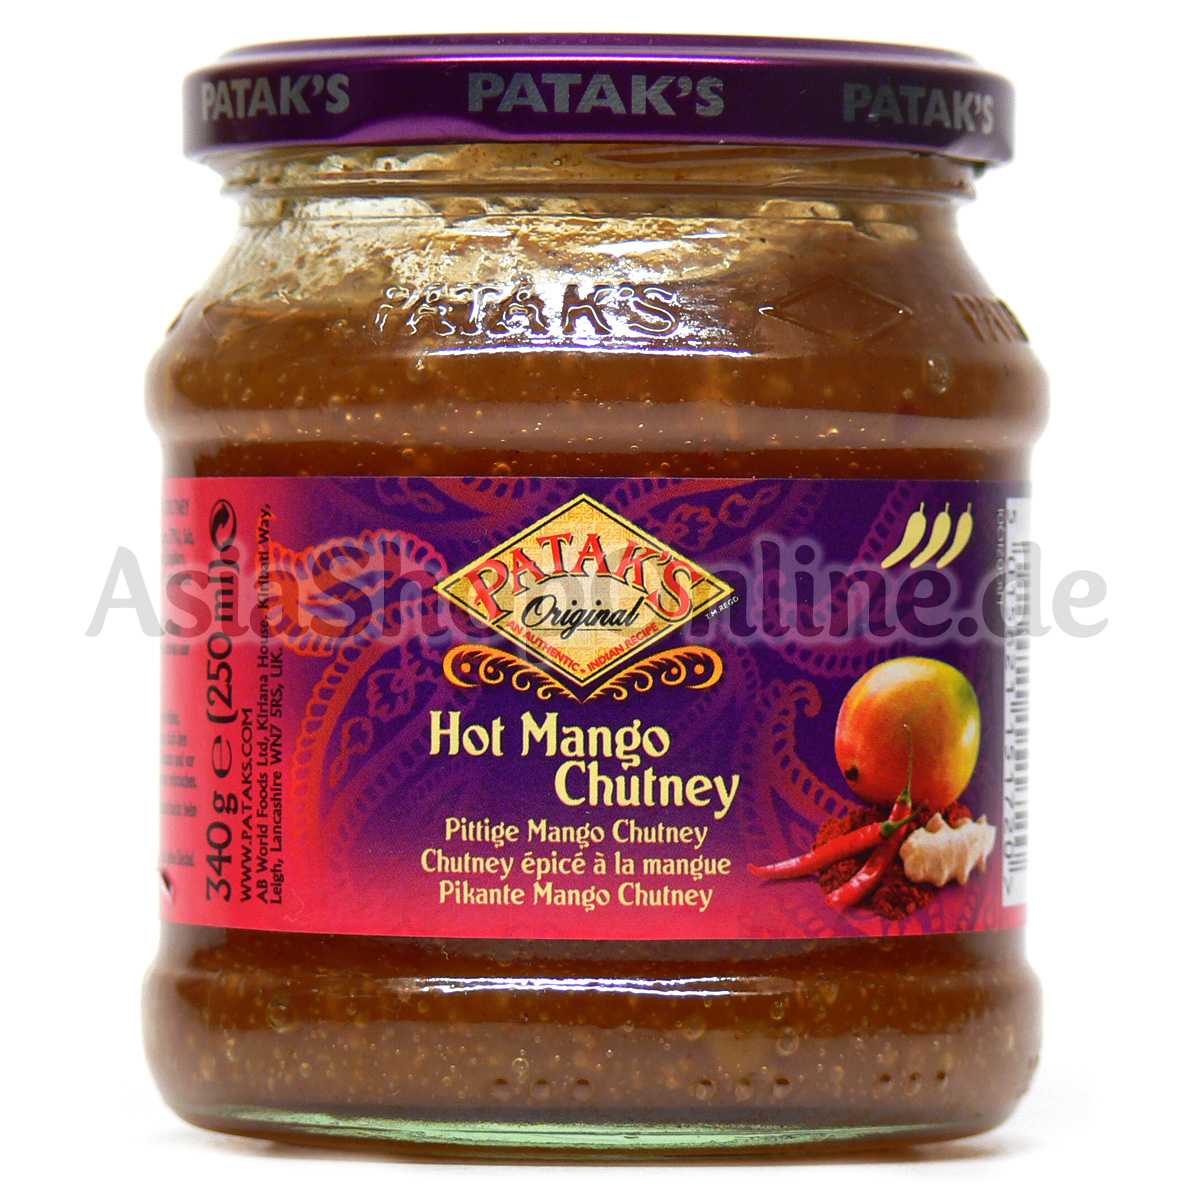 Hot Mango Chutney scharf - Pataks - 340g